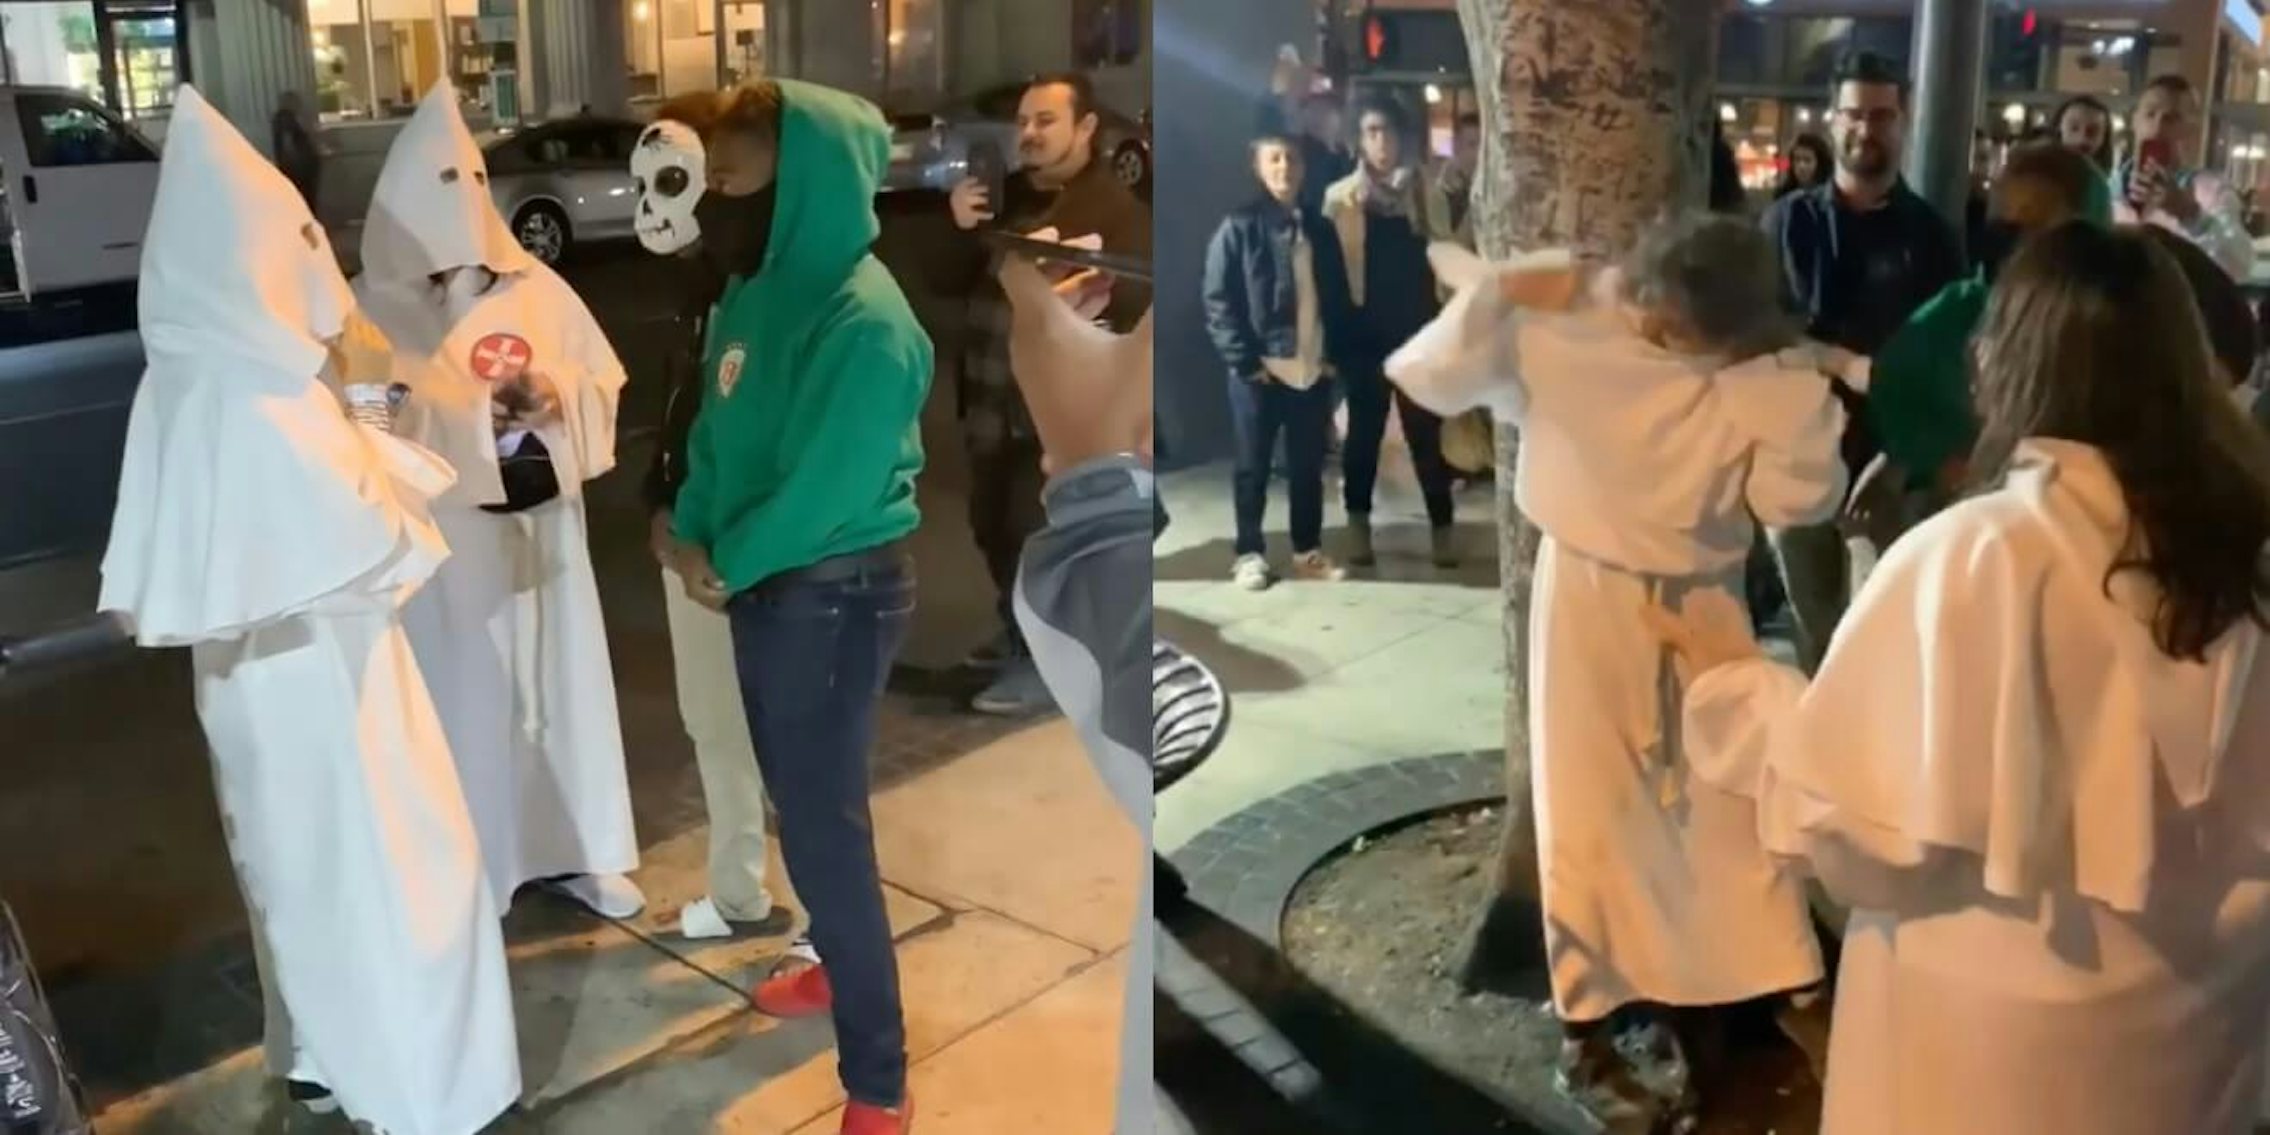 Screenshots show two women in KKK hoods and blood drop cross; one woman is seen taking off her hood in the second photo